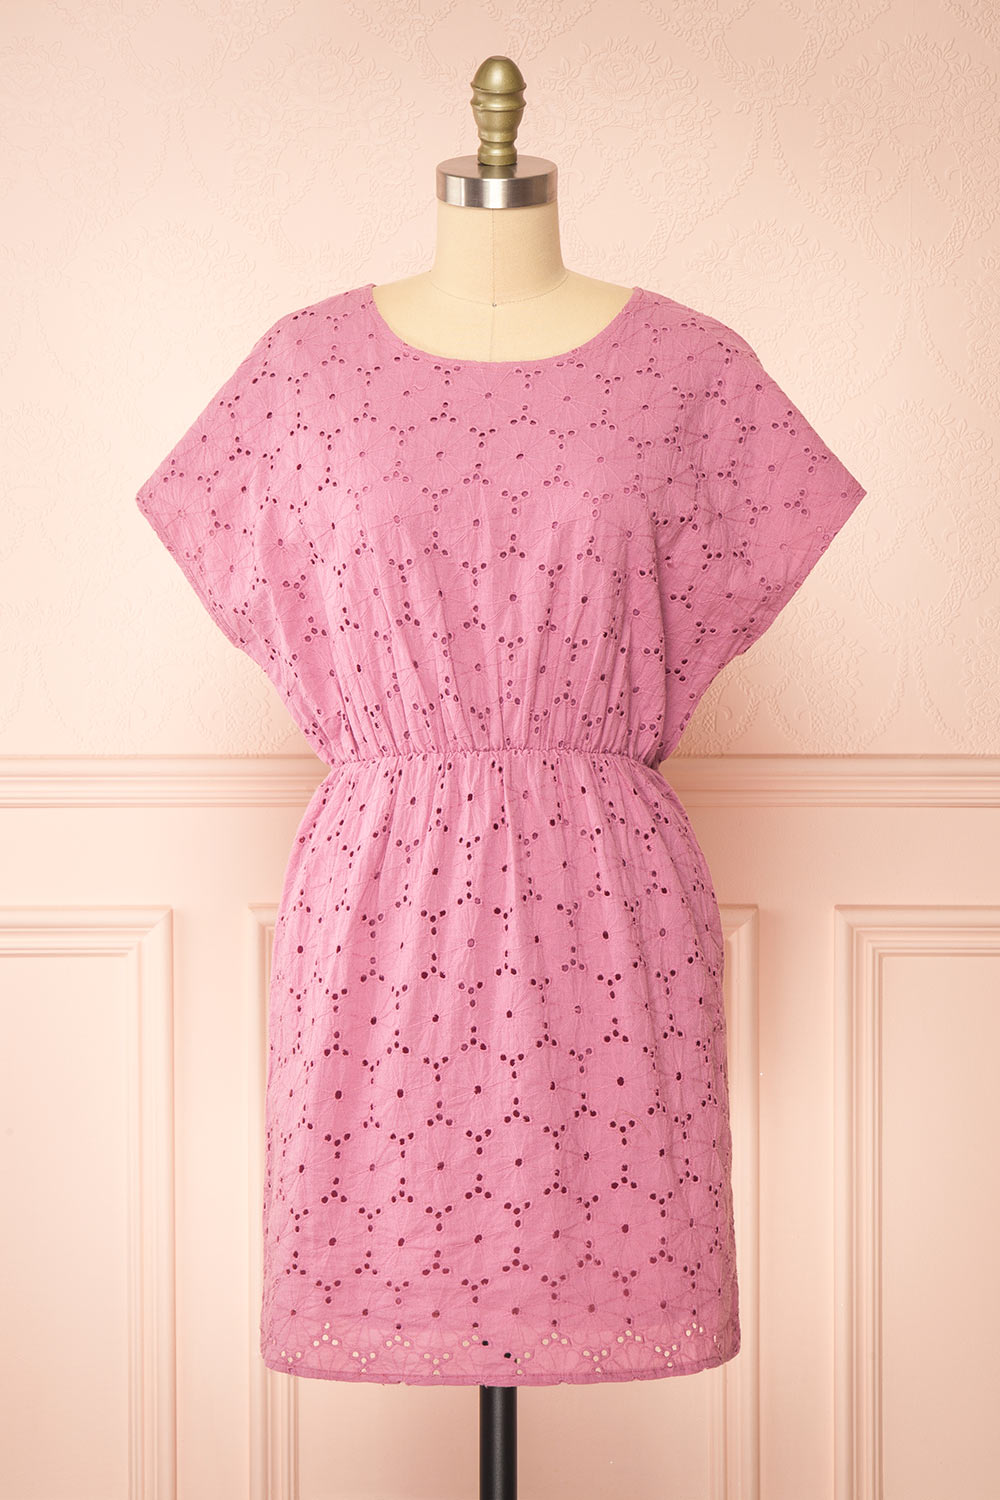 Jonesy Short Pink Floral Dress | Boutique 1861 front view